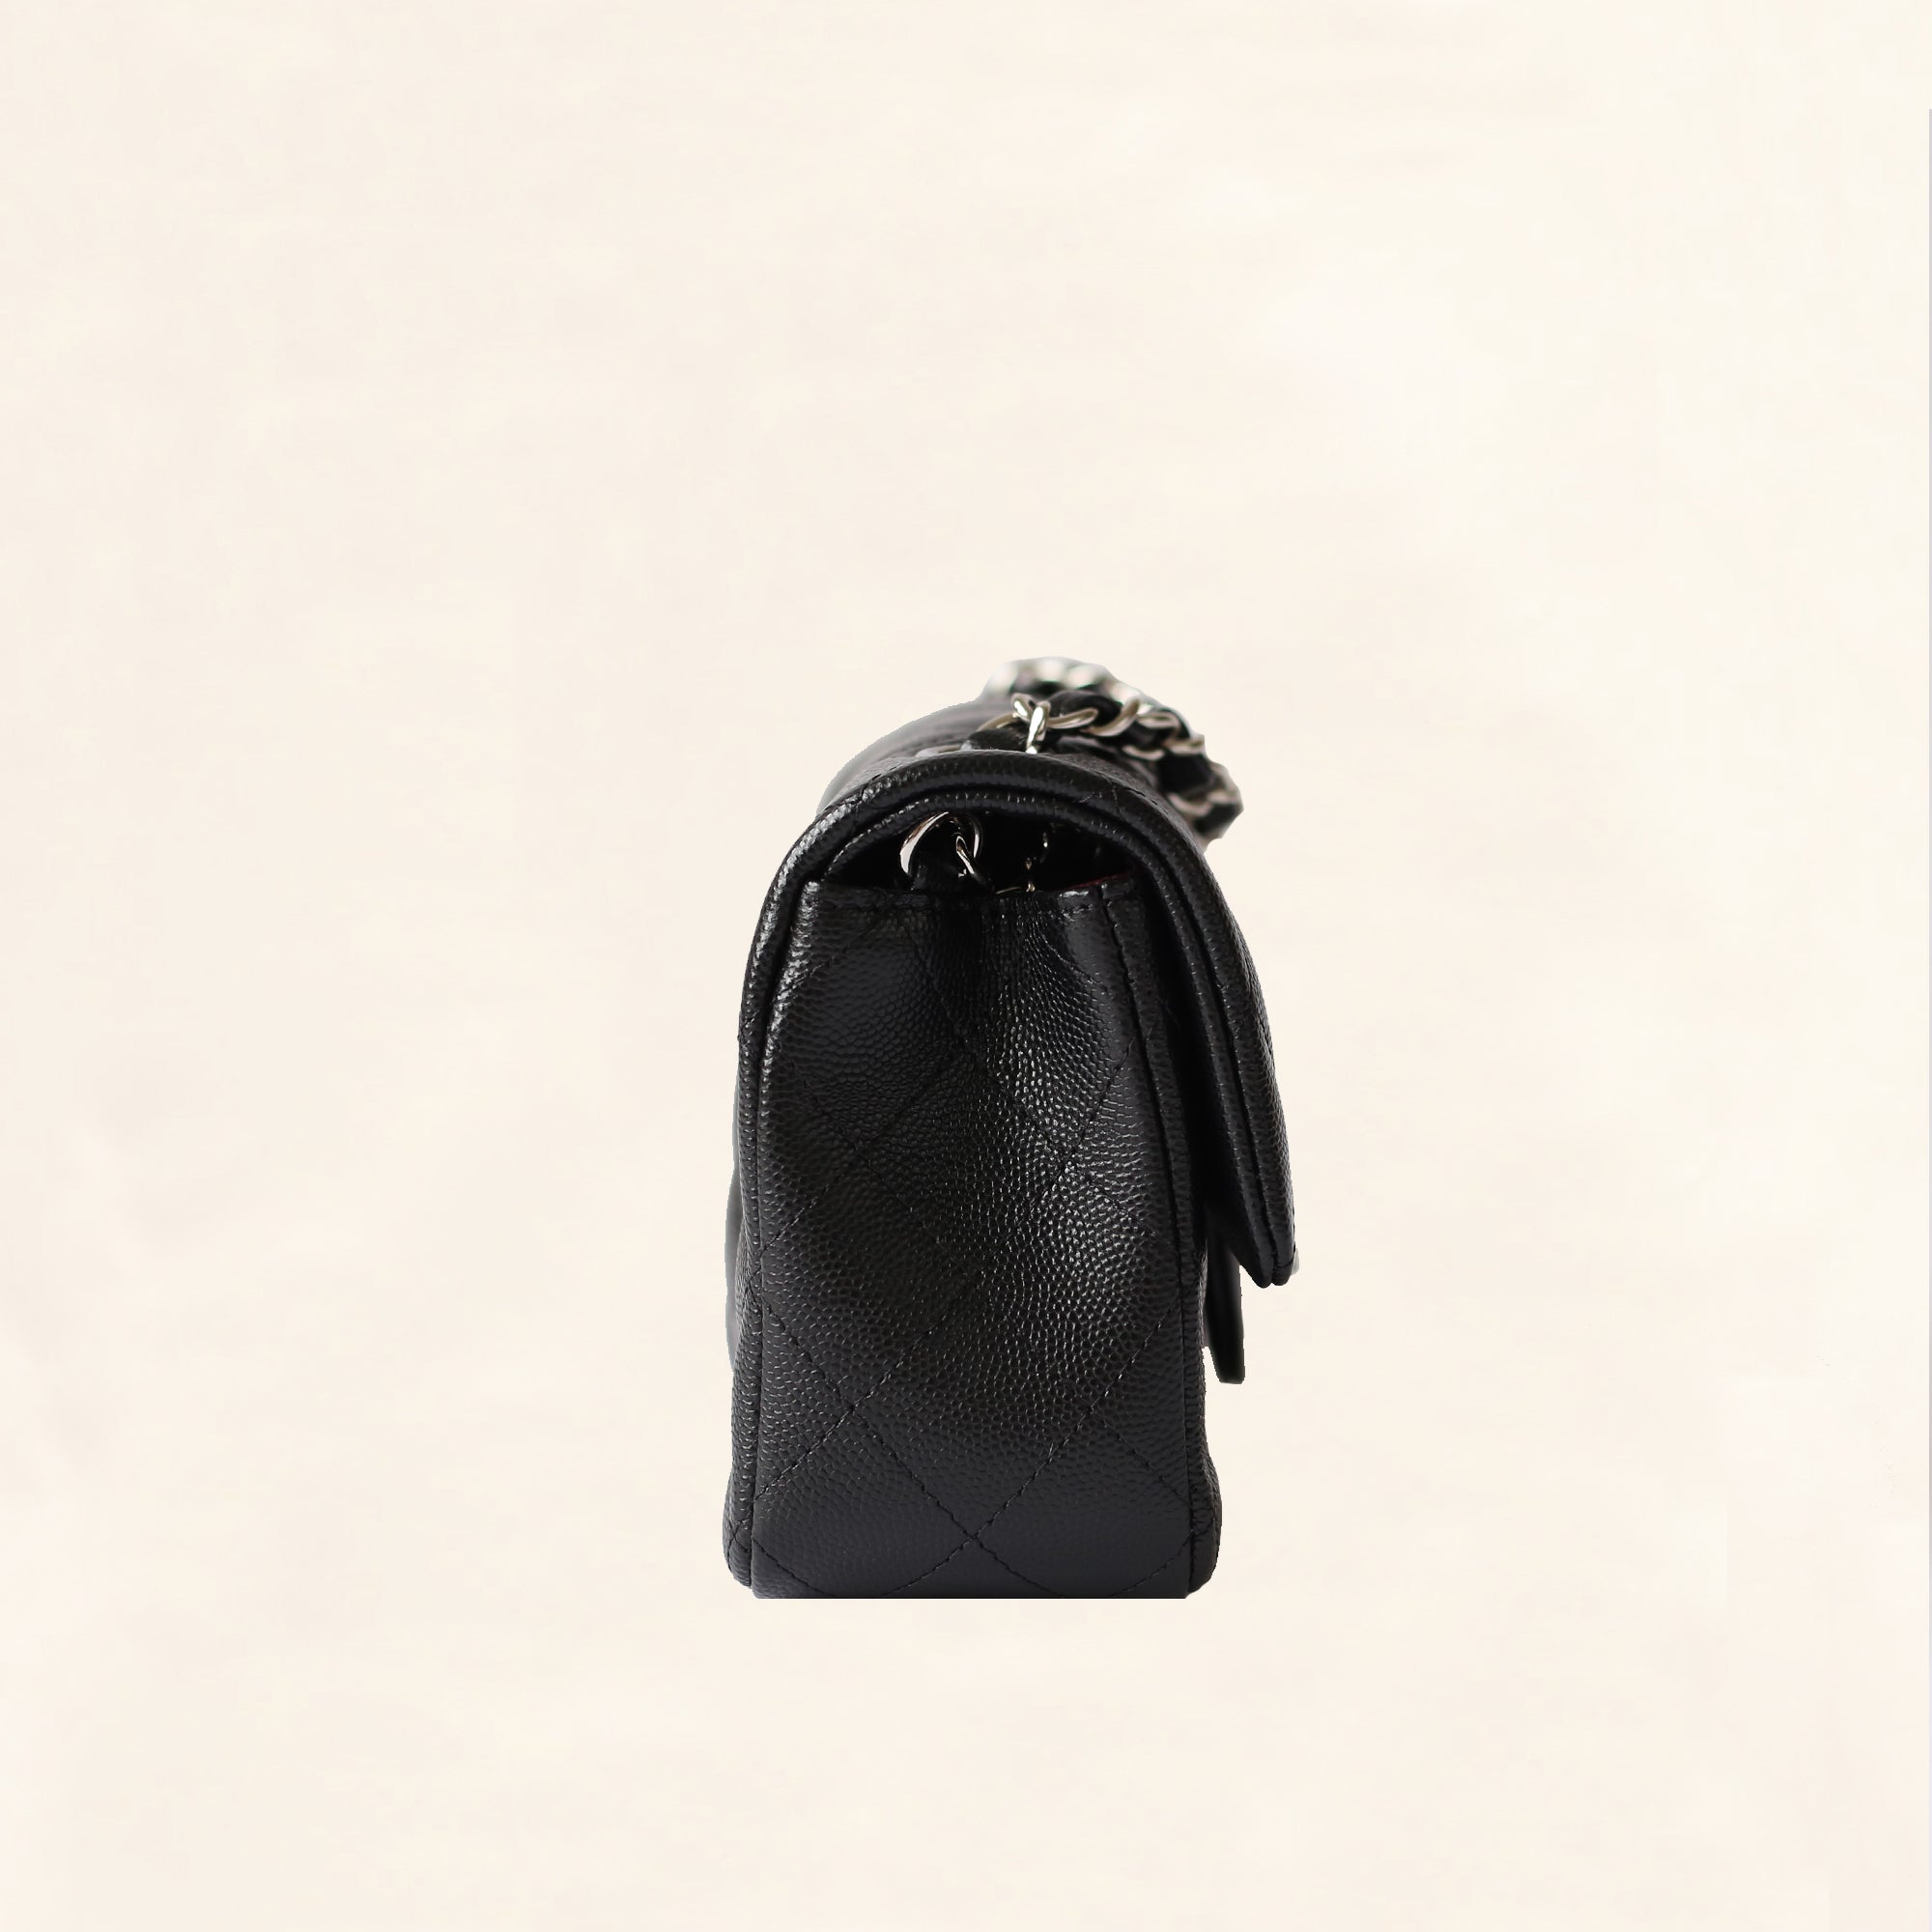 Chanel Classic Flap (XHX2xxxx) Medium Size Black Caviar, Silver Hardware,  with Dust Cover & Box